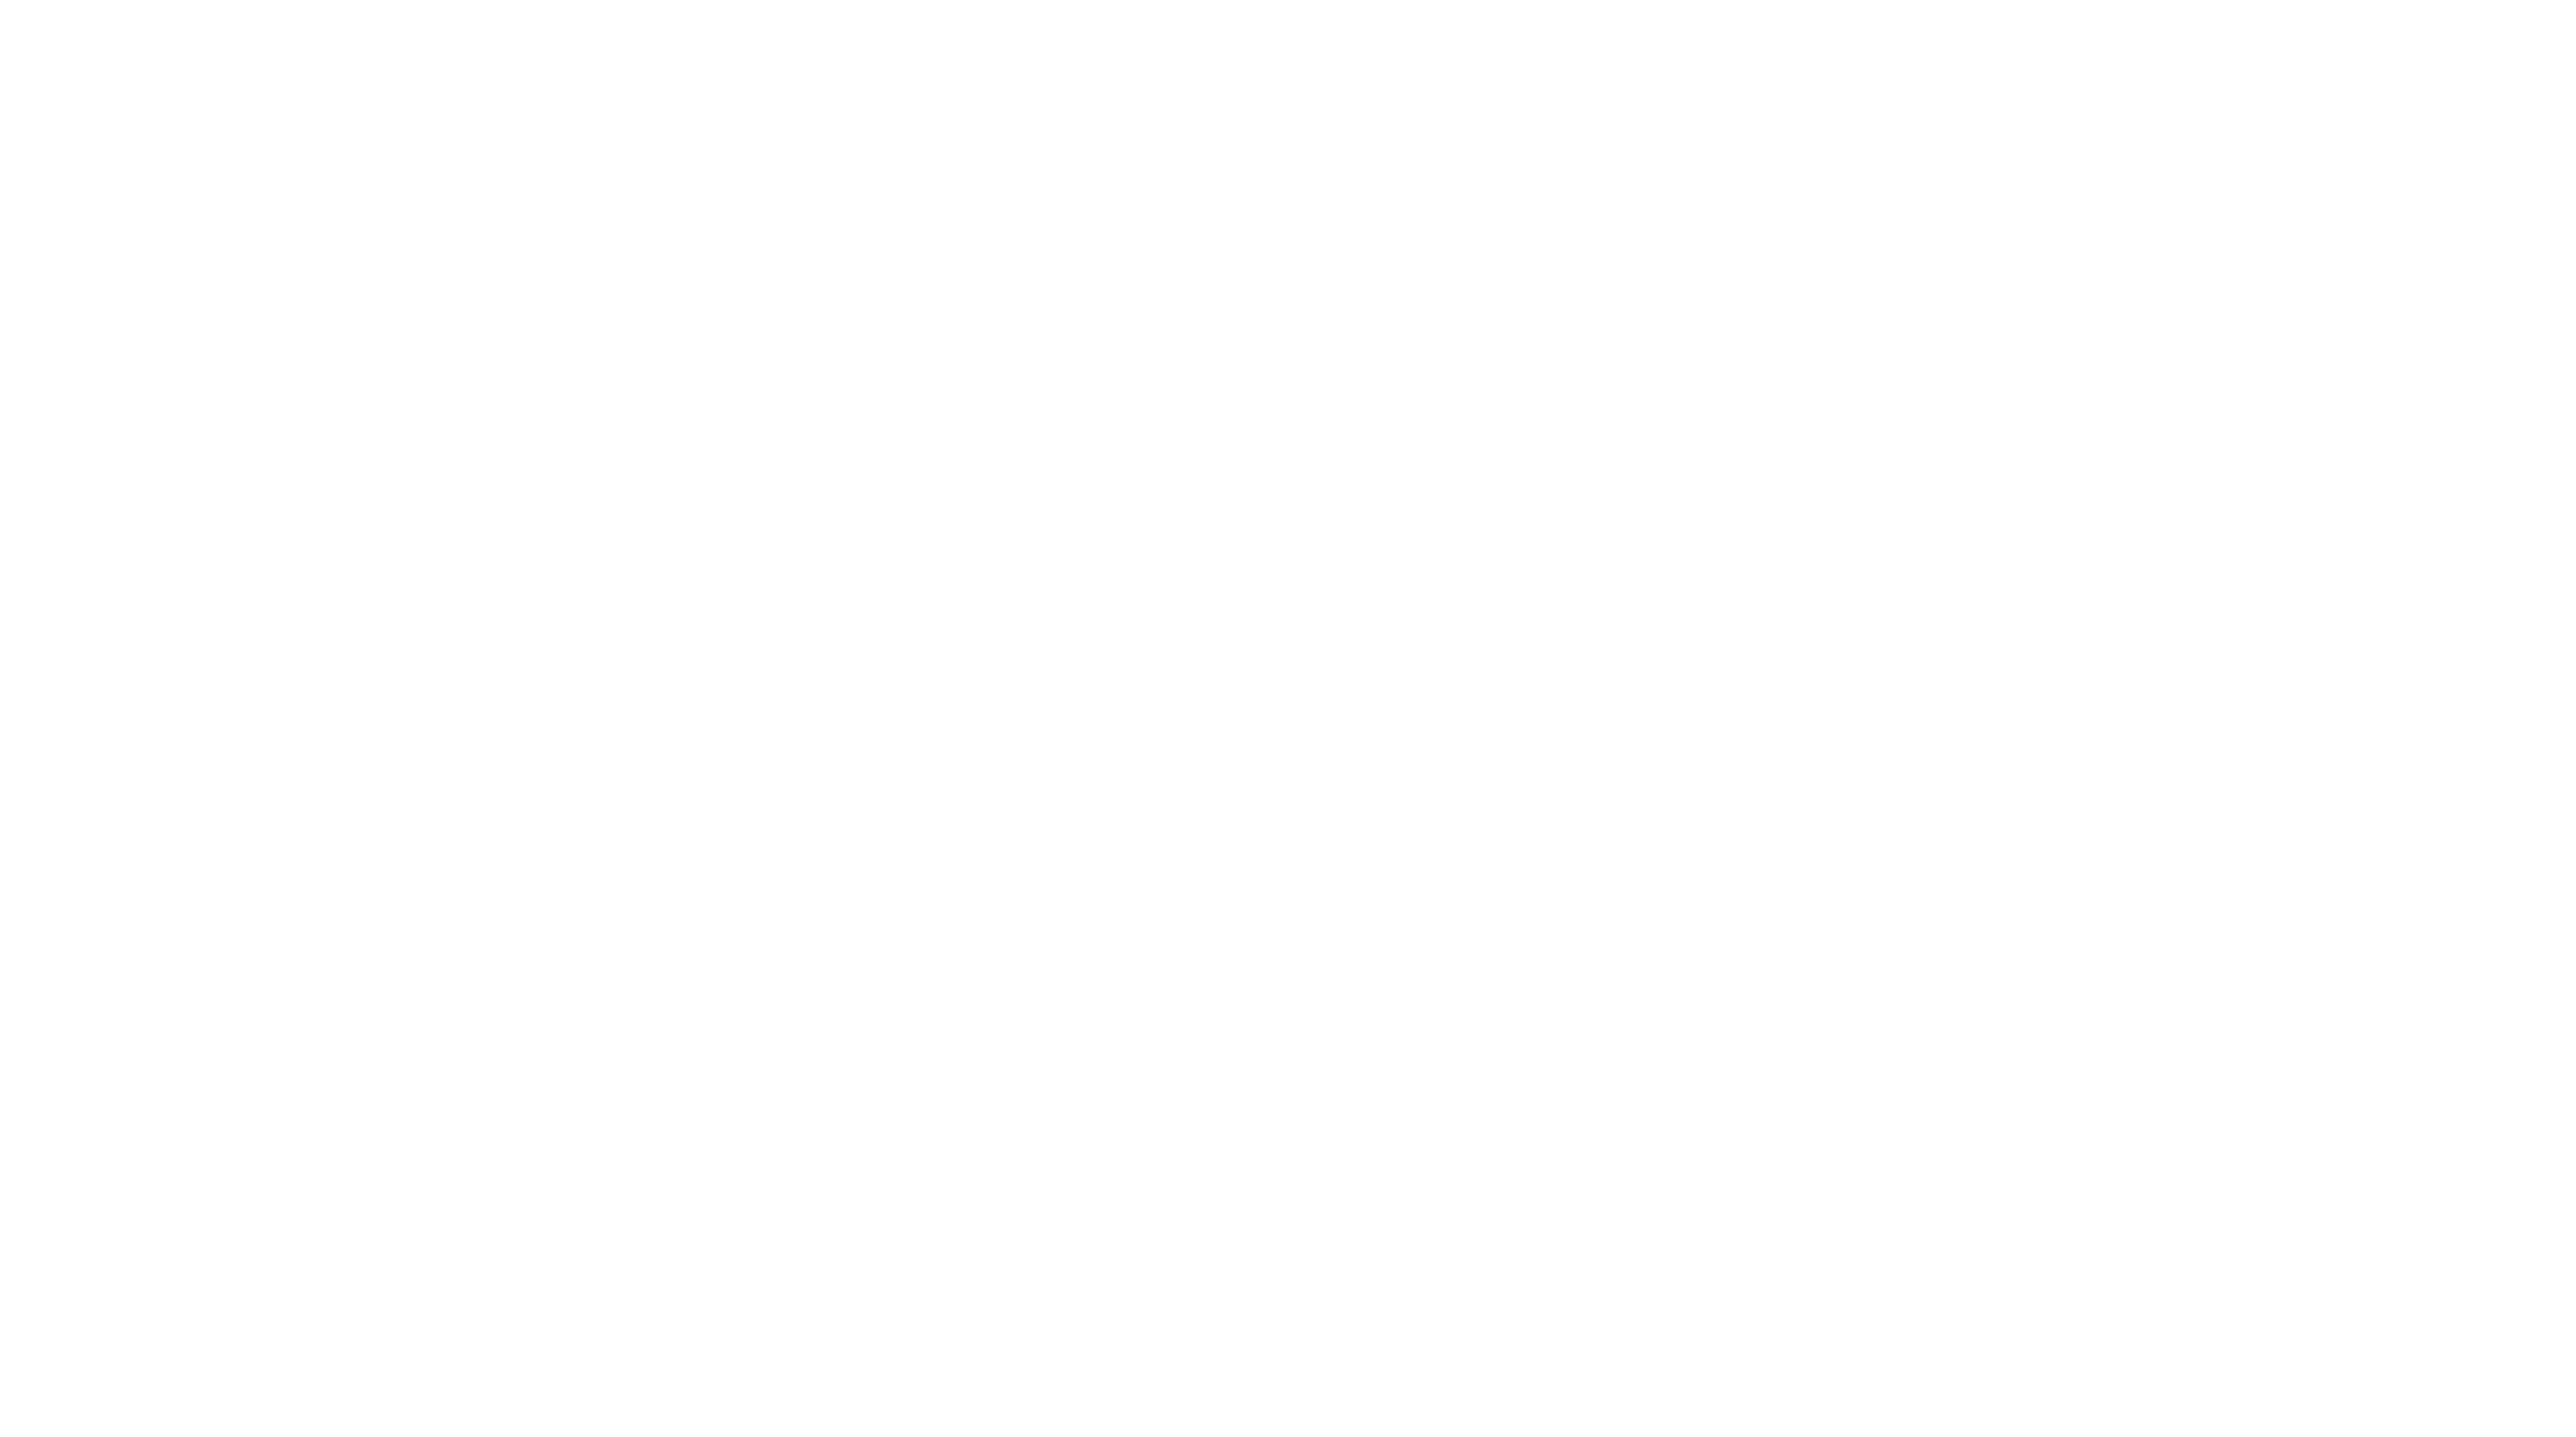 Five9 Inc logo